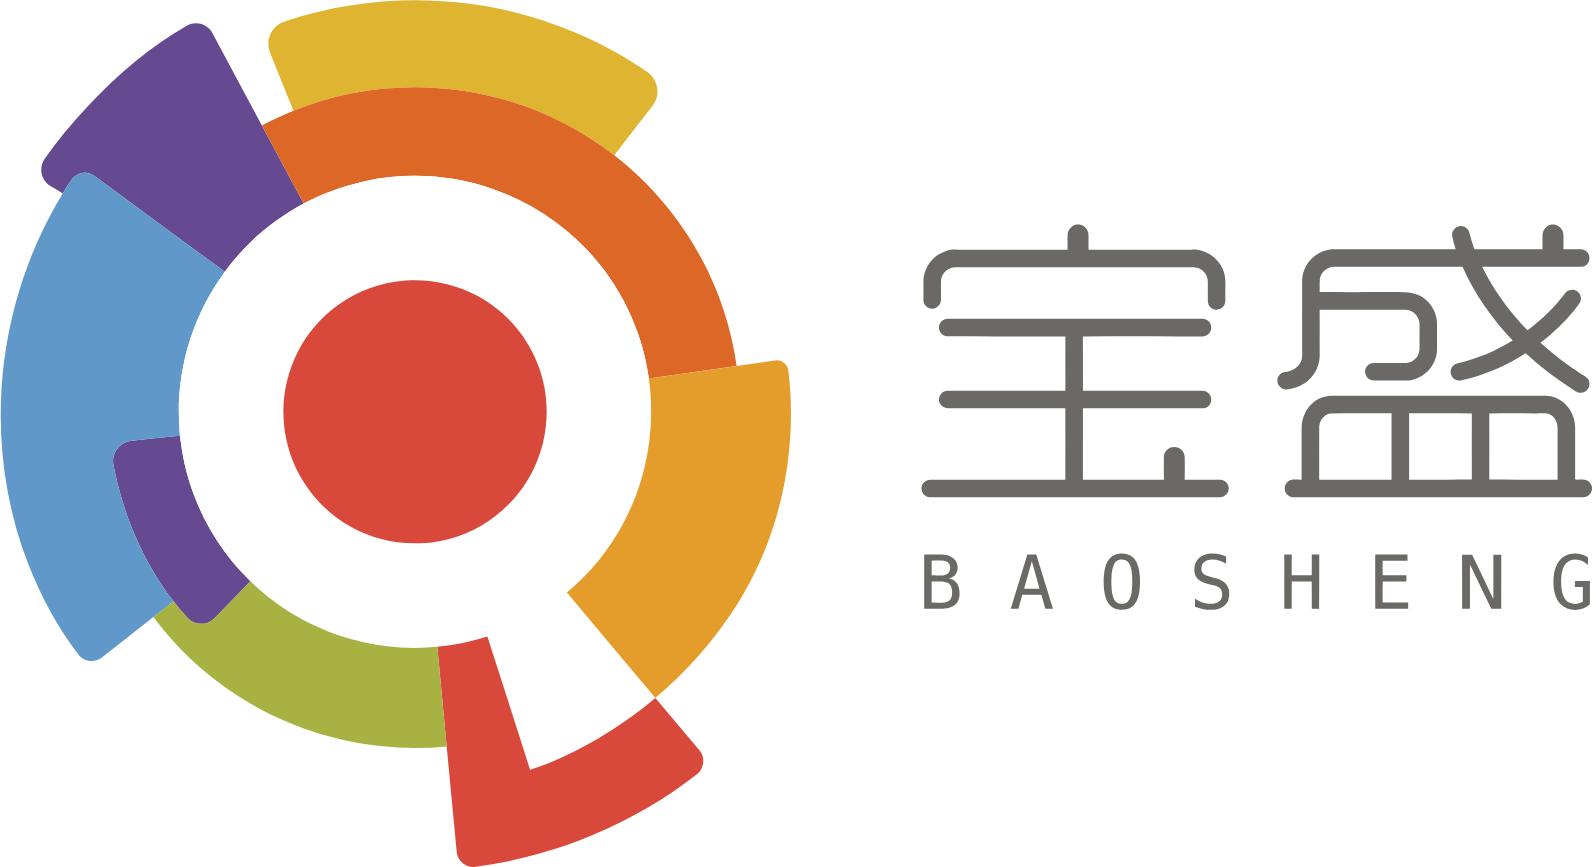 Baosheng Media Group logo large (transparent PNG)